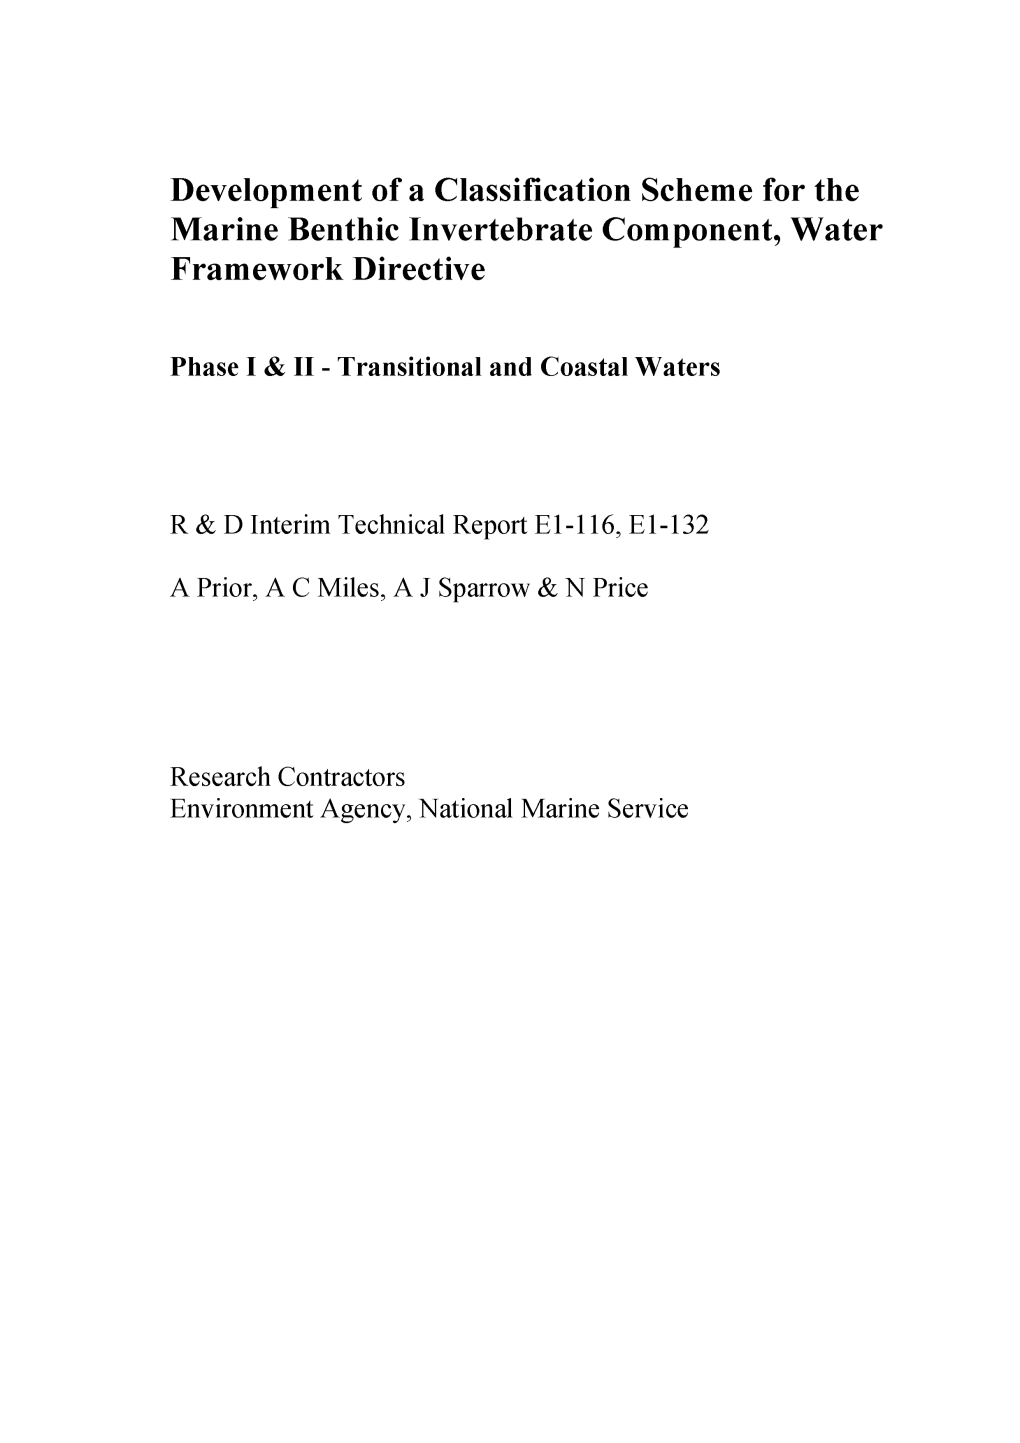 Development of a Classification Scheme for the Marine Benthic Invertebrate Component, Water Framework Directive